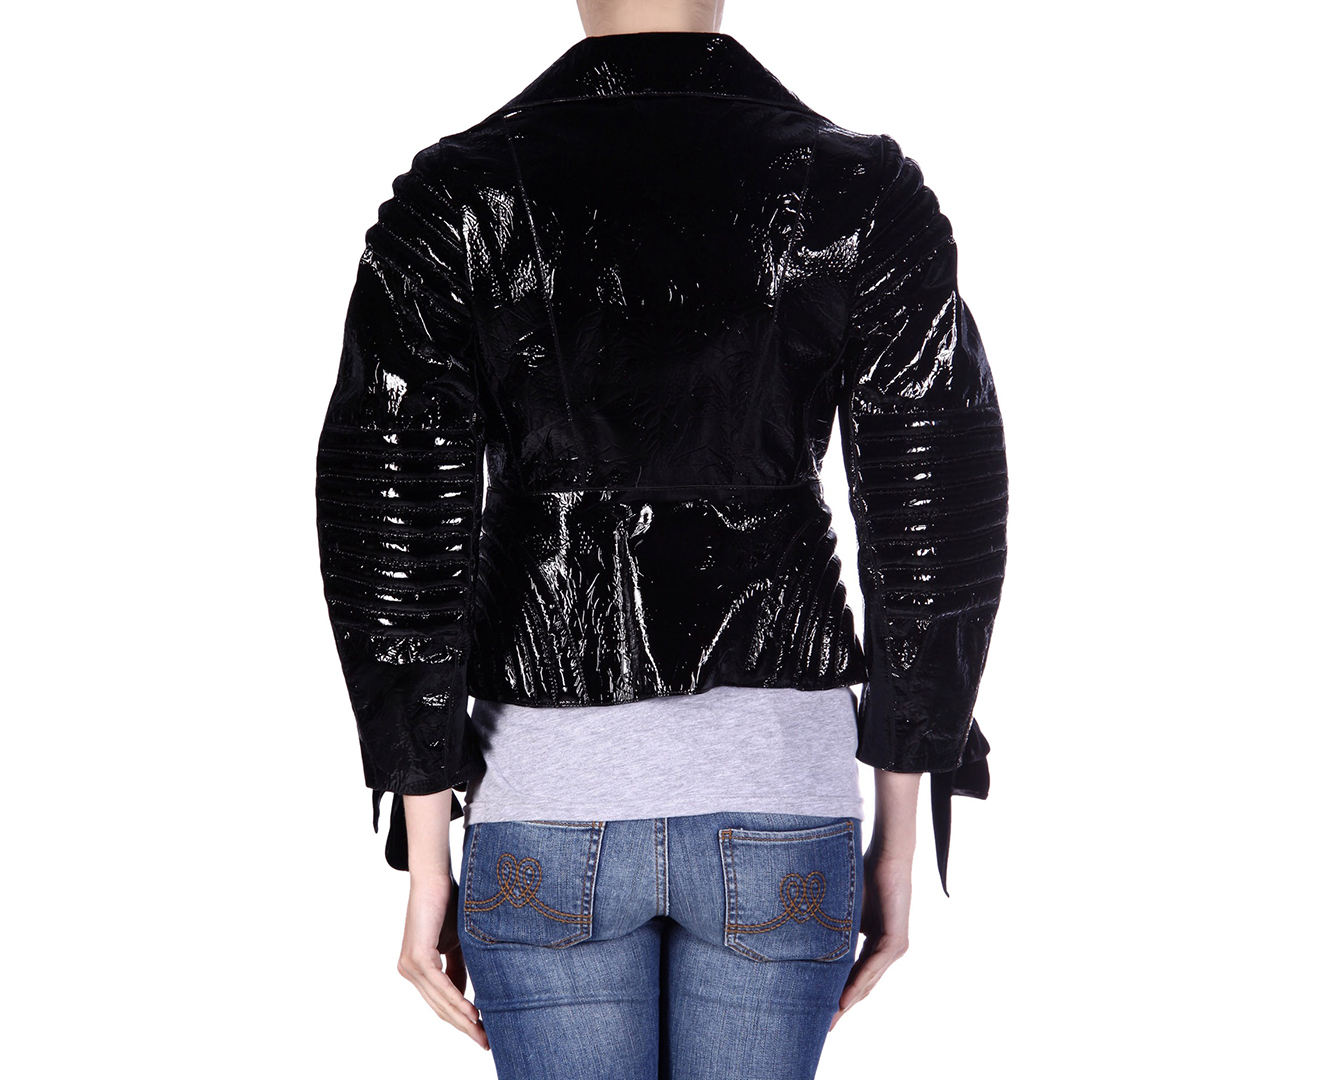 Alexander McQueen Women's Jacket - Black | Catch.com.au